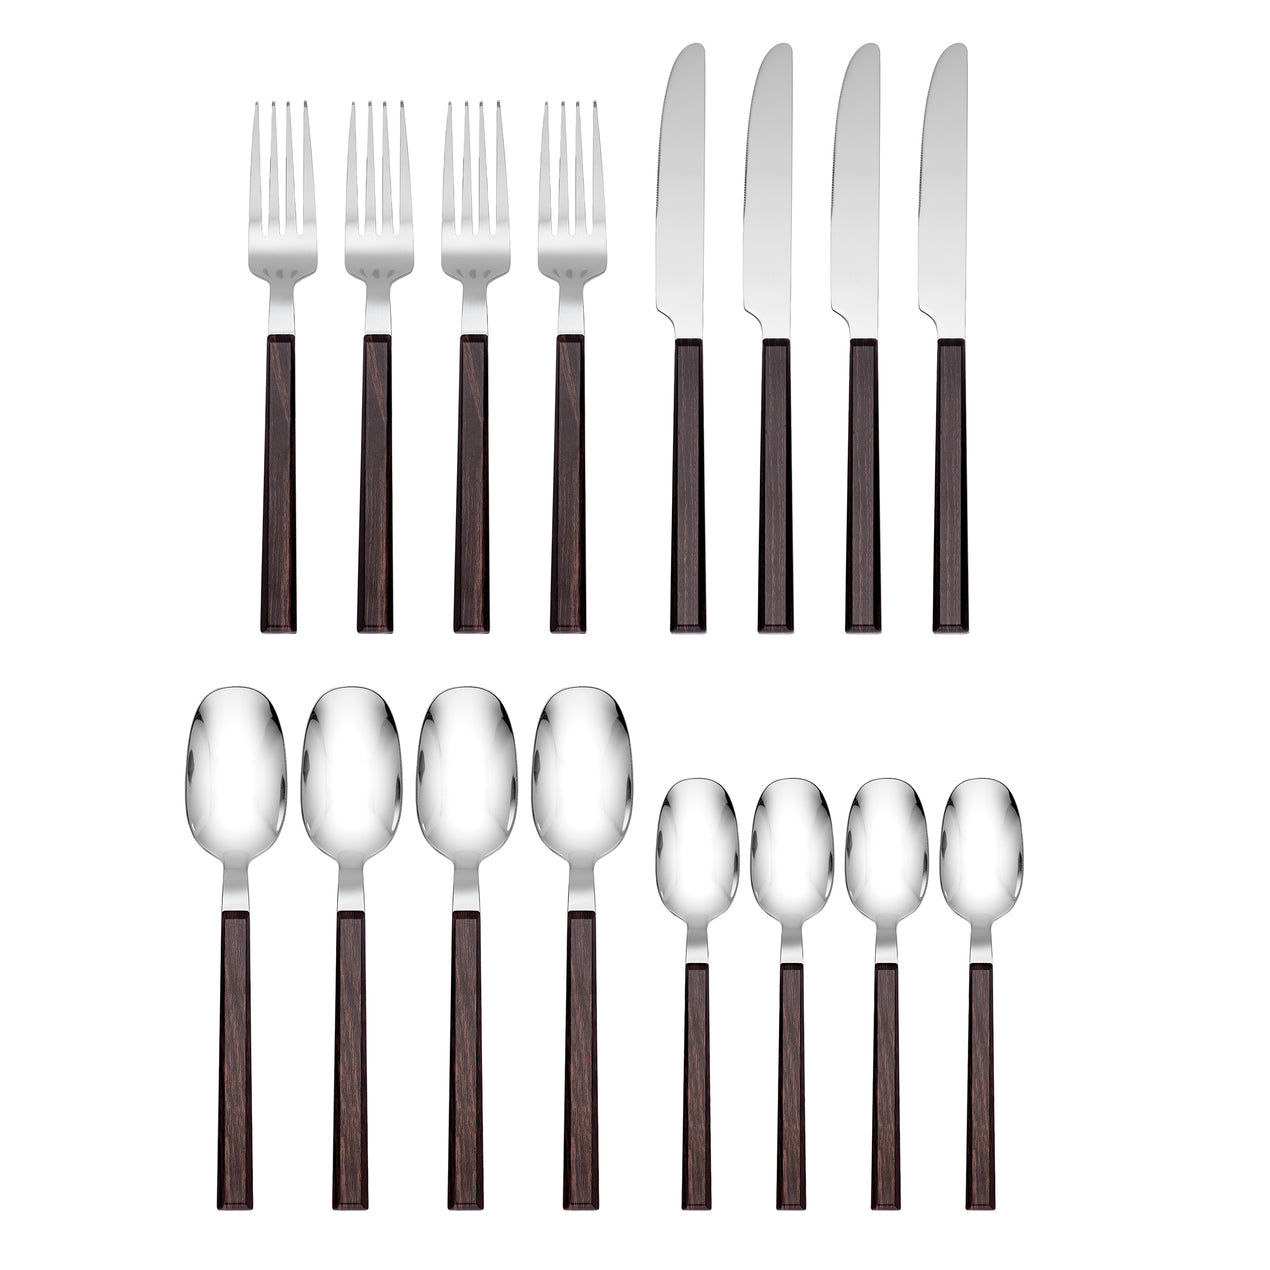 Hampton Forge 16-Piece Tomodachi Prints Cutlery Set